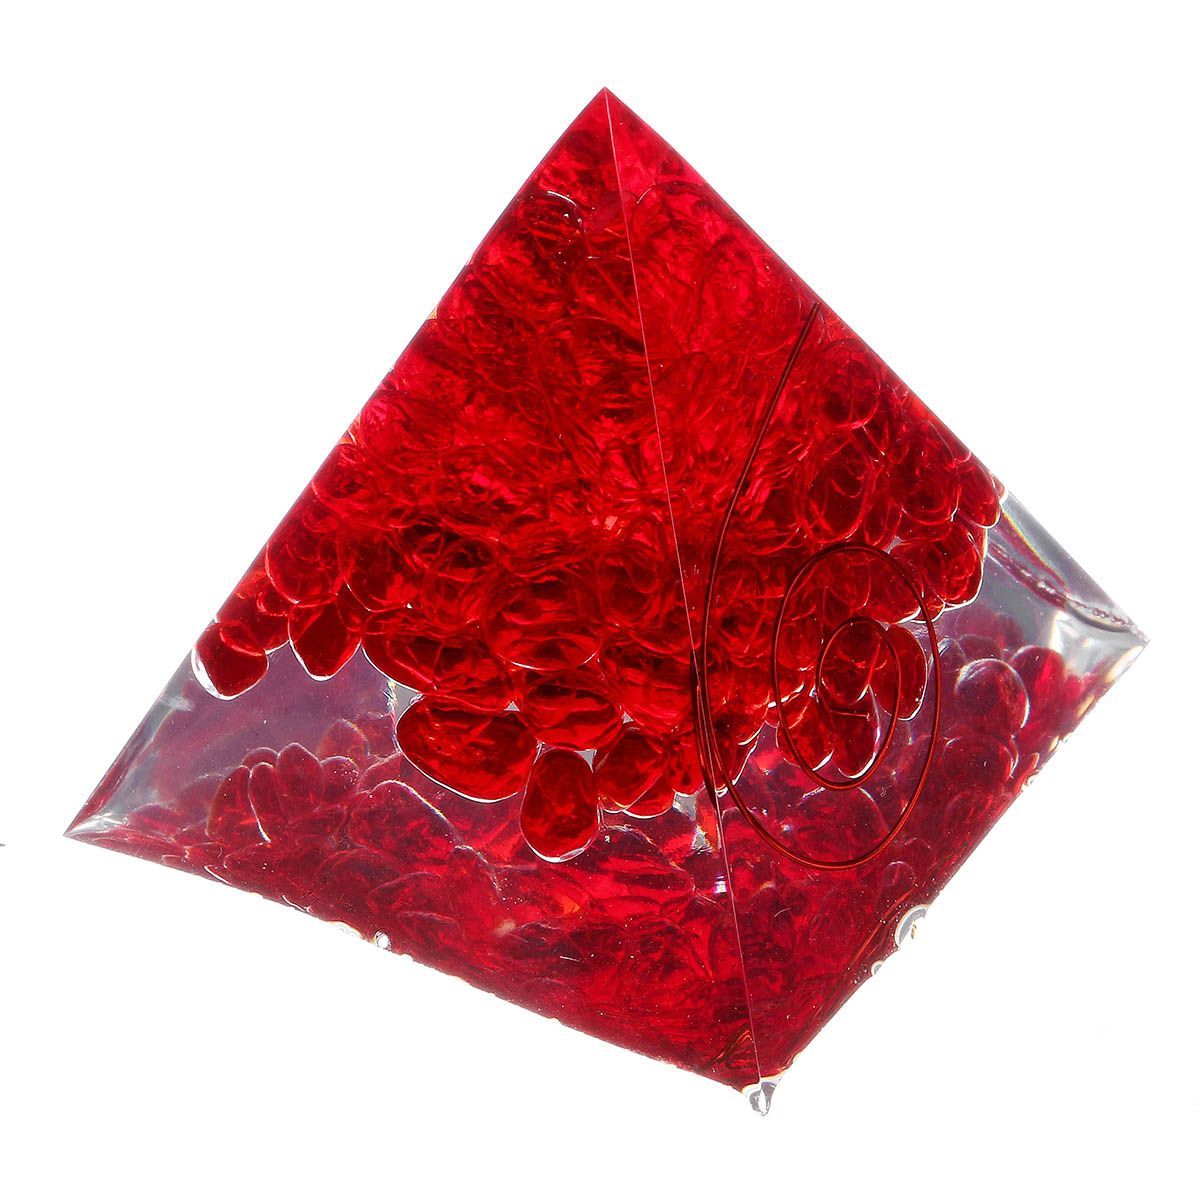 Orgone-Pyramid-Energy-Generator-Tower-Healing-Crystal-Red-Gemstone-Home-Decorations-1467014